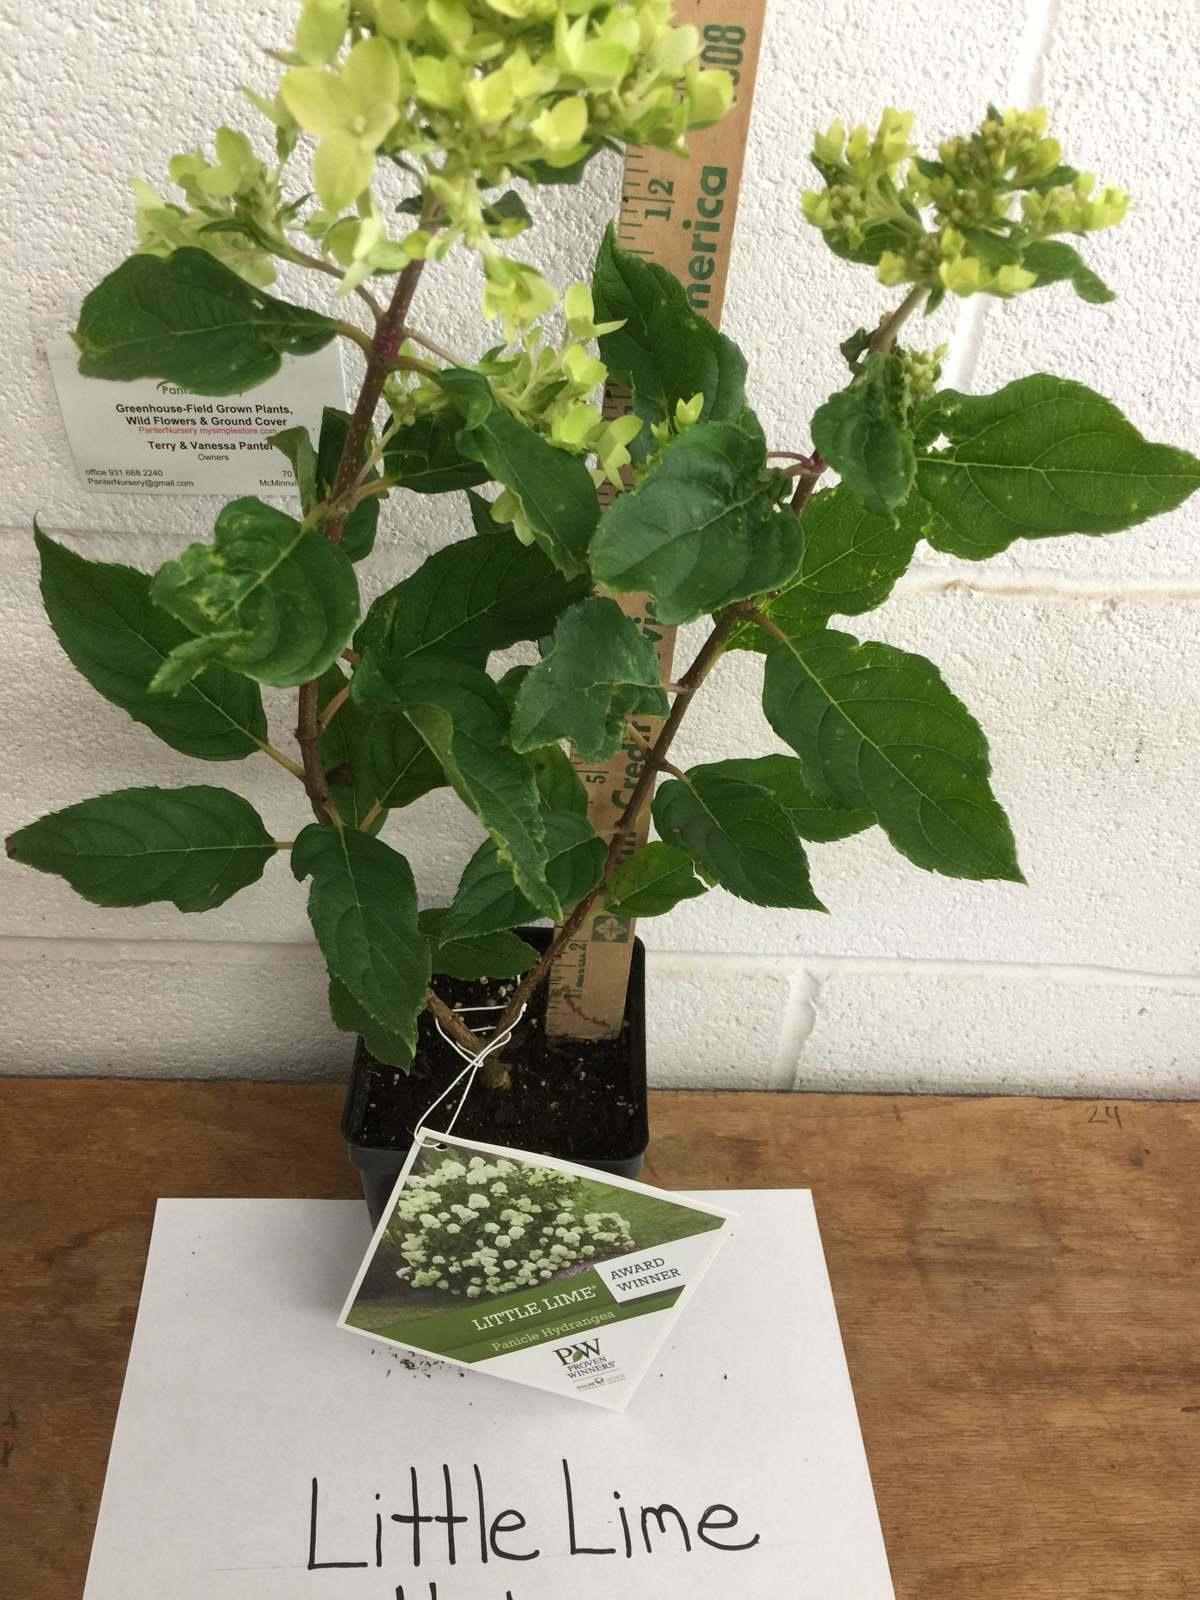 2 Little Lime Panicle Hardy Hydrangea Shrubs - 6-10" Tall Live Plants - Qt Pot - The Nursery Center